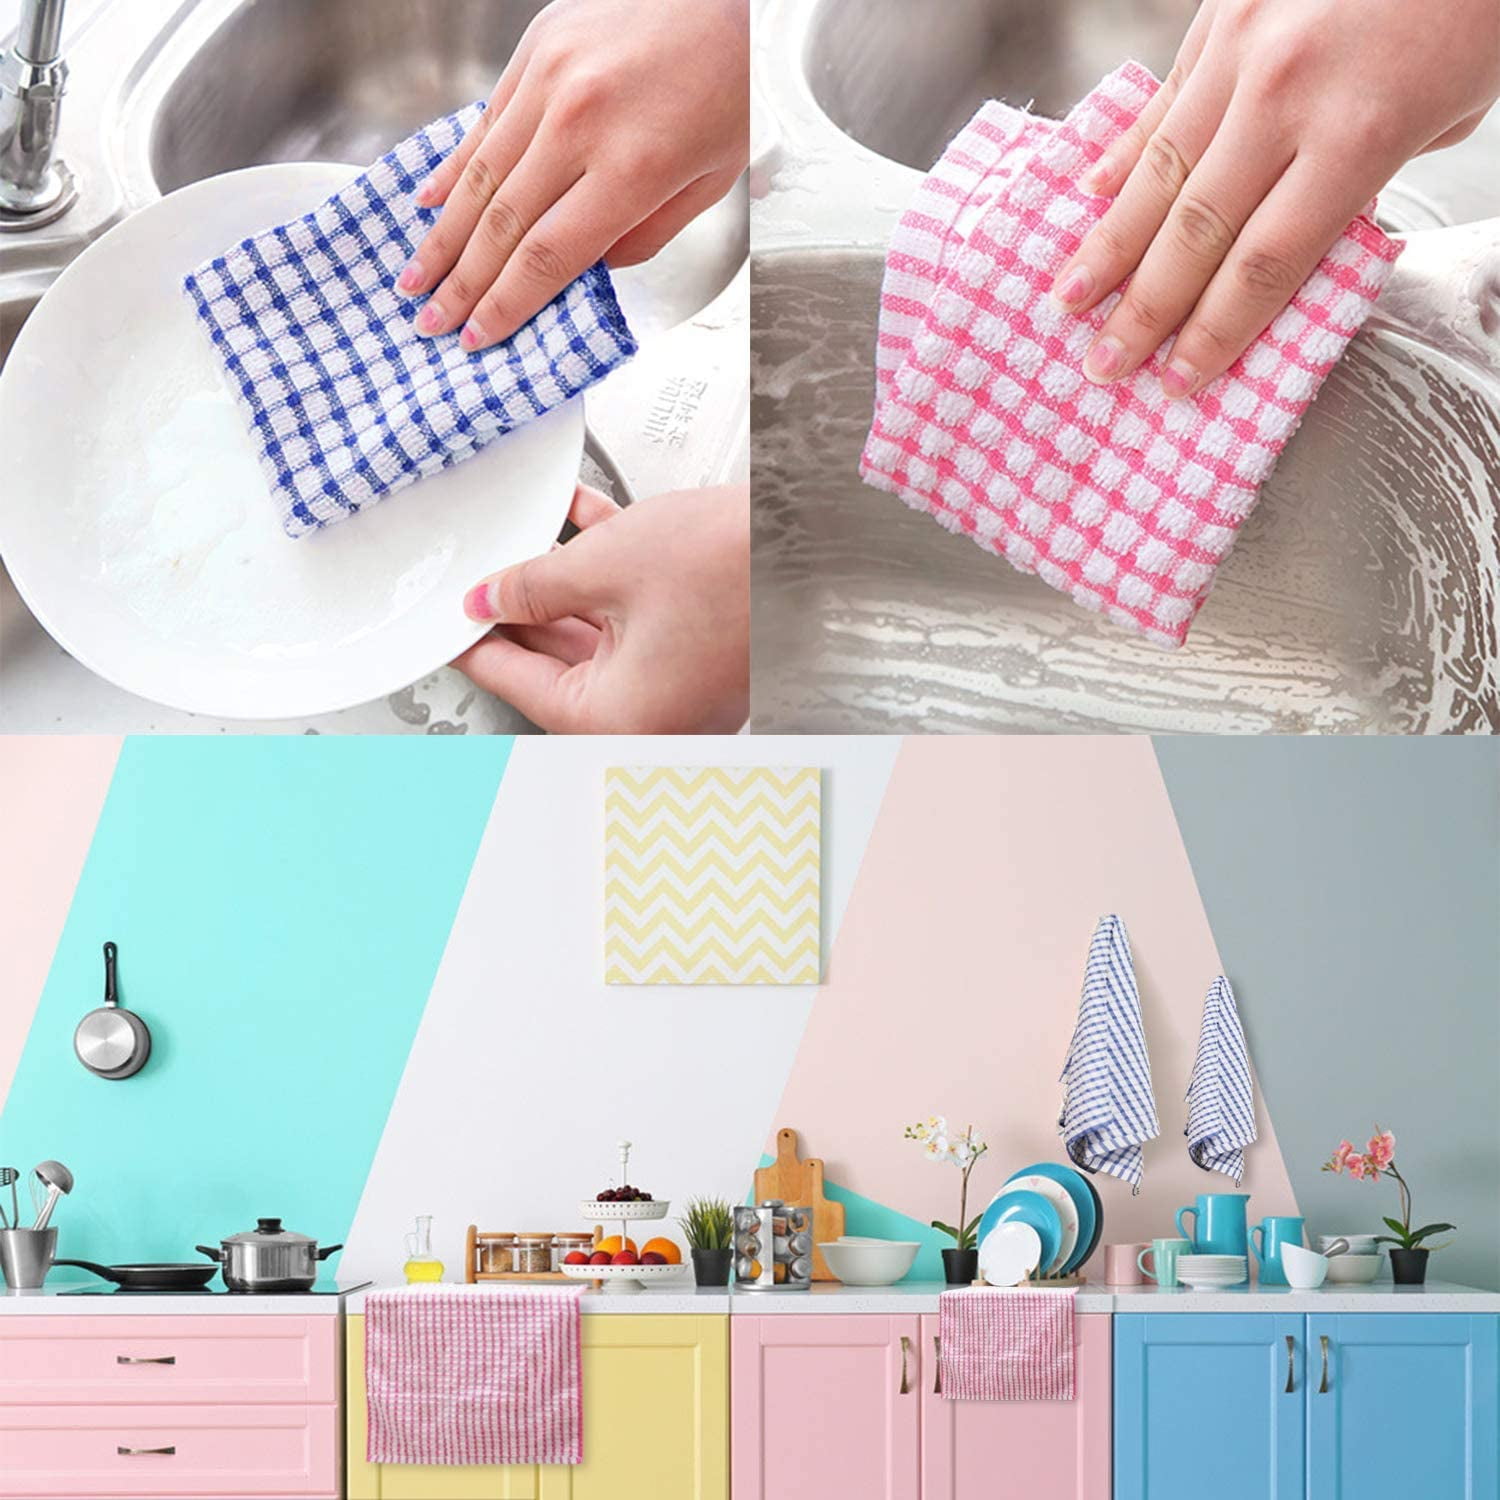 Kitchen Dishcloths 12pcs 11x12 Inches Bulk Cotton Kitchen Dish Cloths Scrubbing Wash Sets (Mix color)